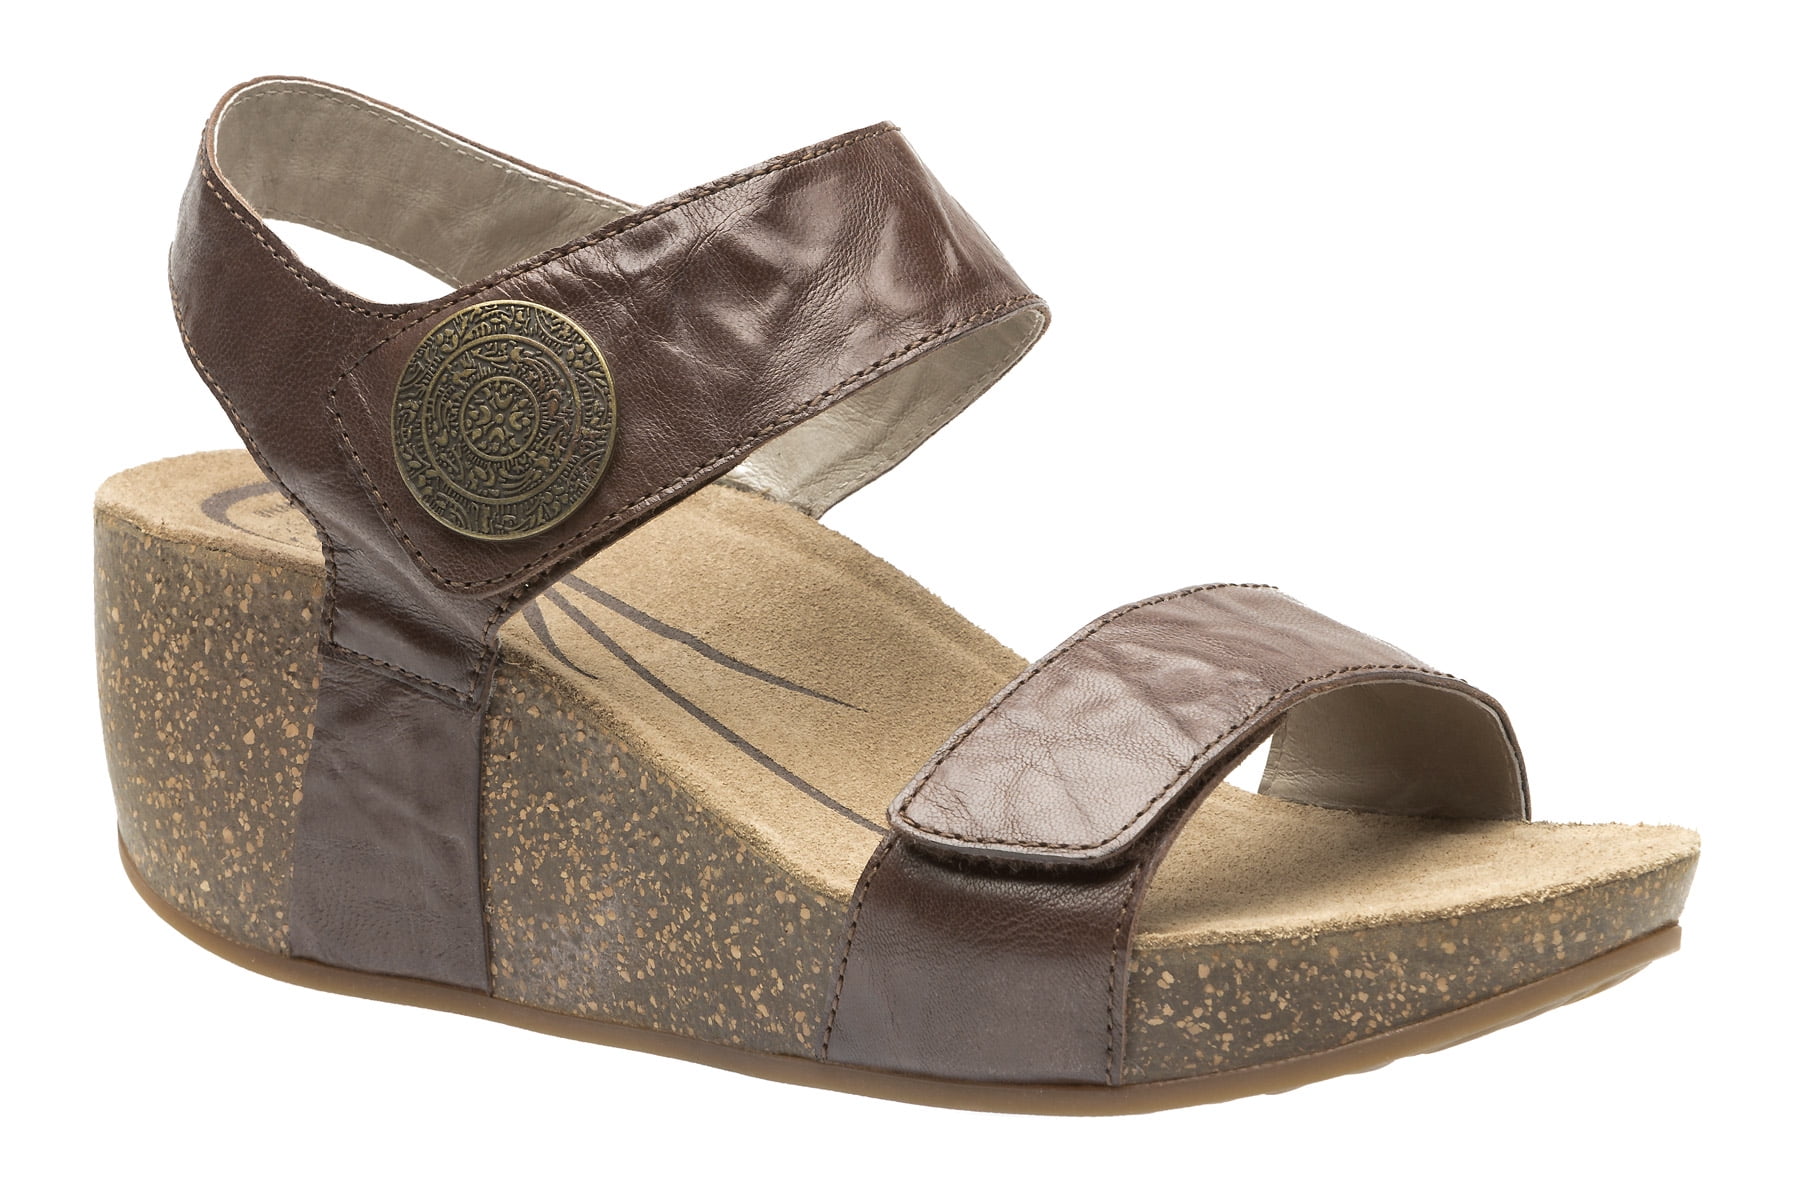 ABEO Una Metatarsal - Wedge Sandals in Brown - Walmart.com